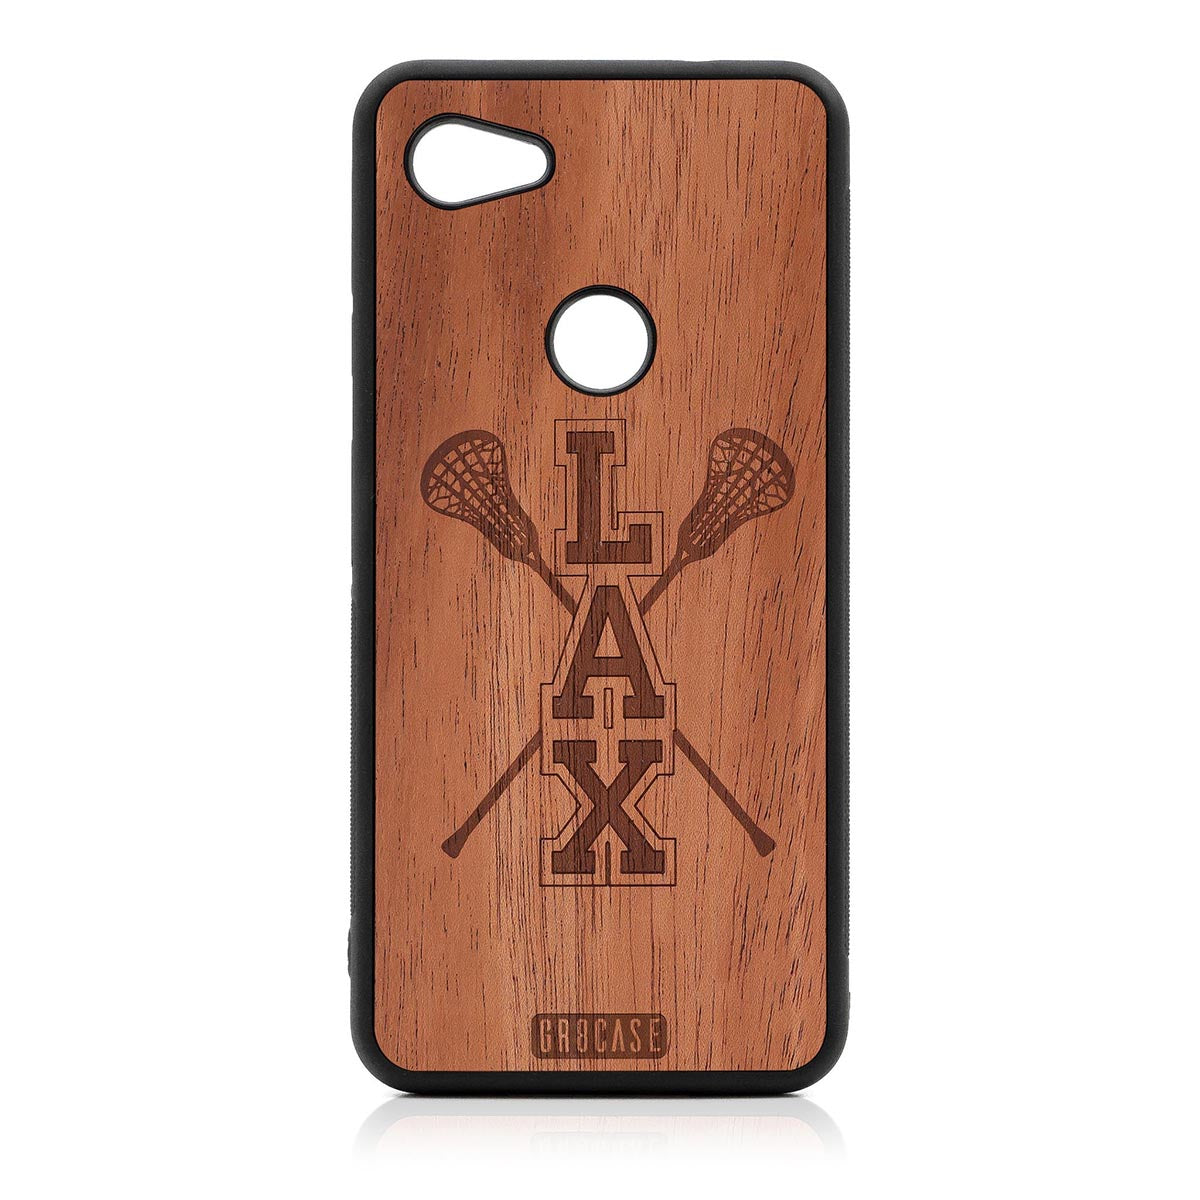 Lacrosse (LAX) Sticks Design Wood Case Google Pixel 3A by GR8CASE